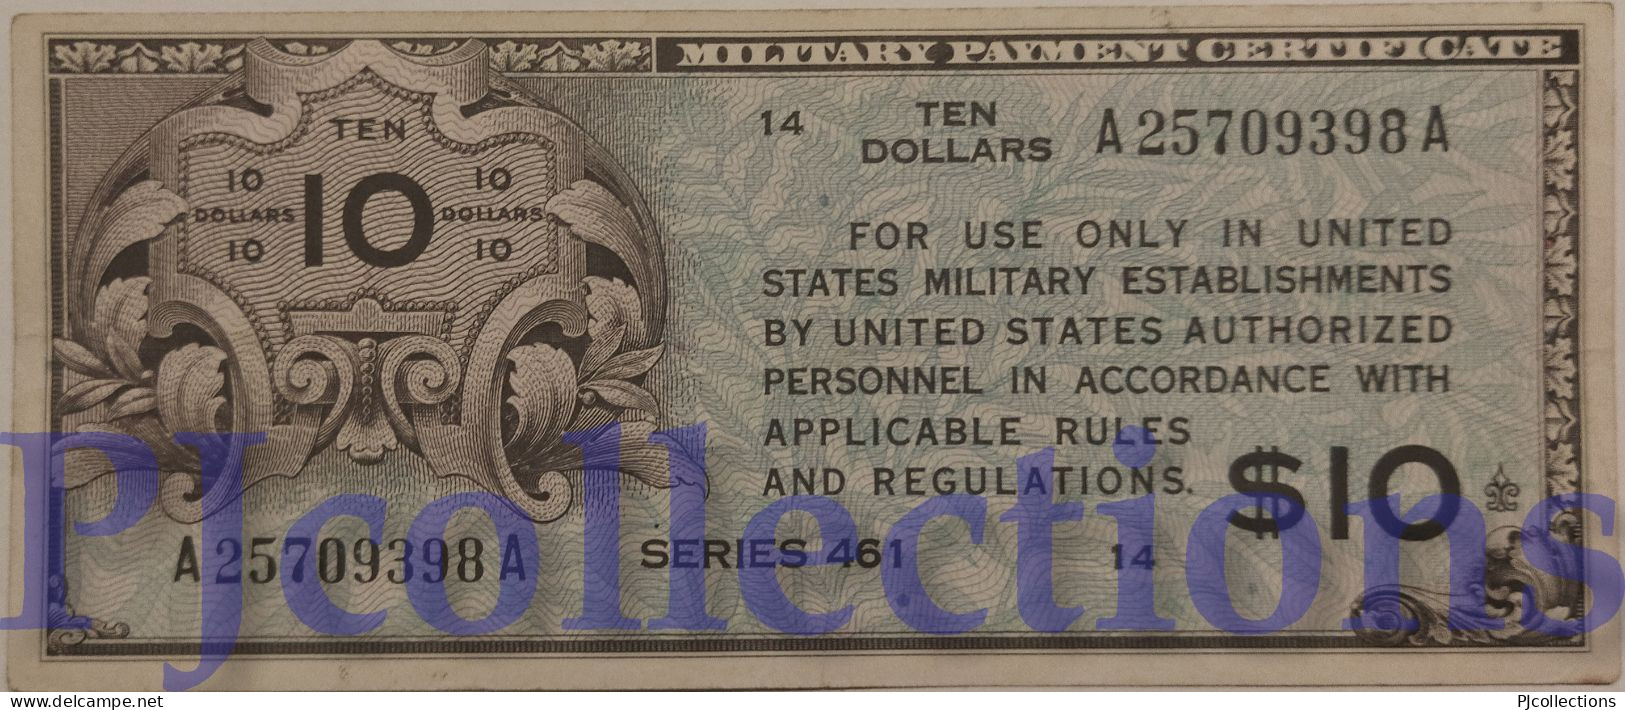 UNITED STATES OF AMERICA 10 DOLLARS 1946 PICK M7 VF - 1946 - Series 461